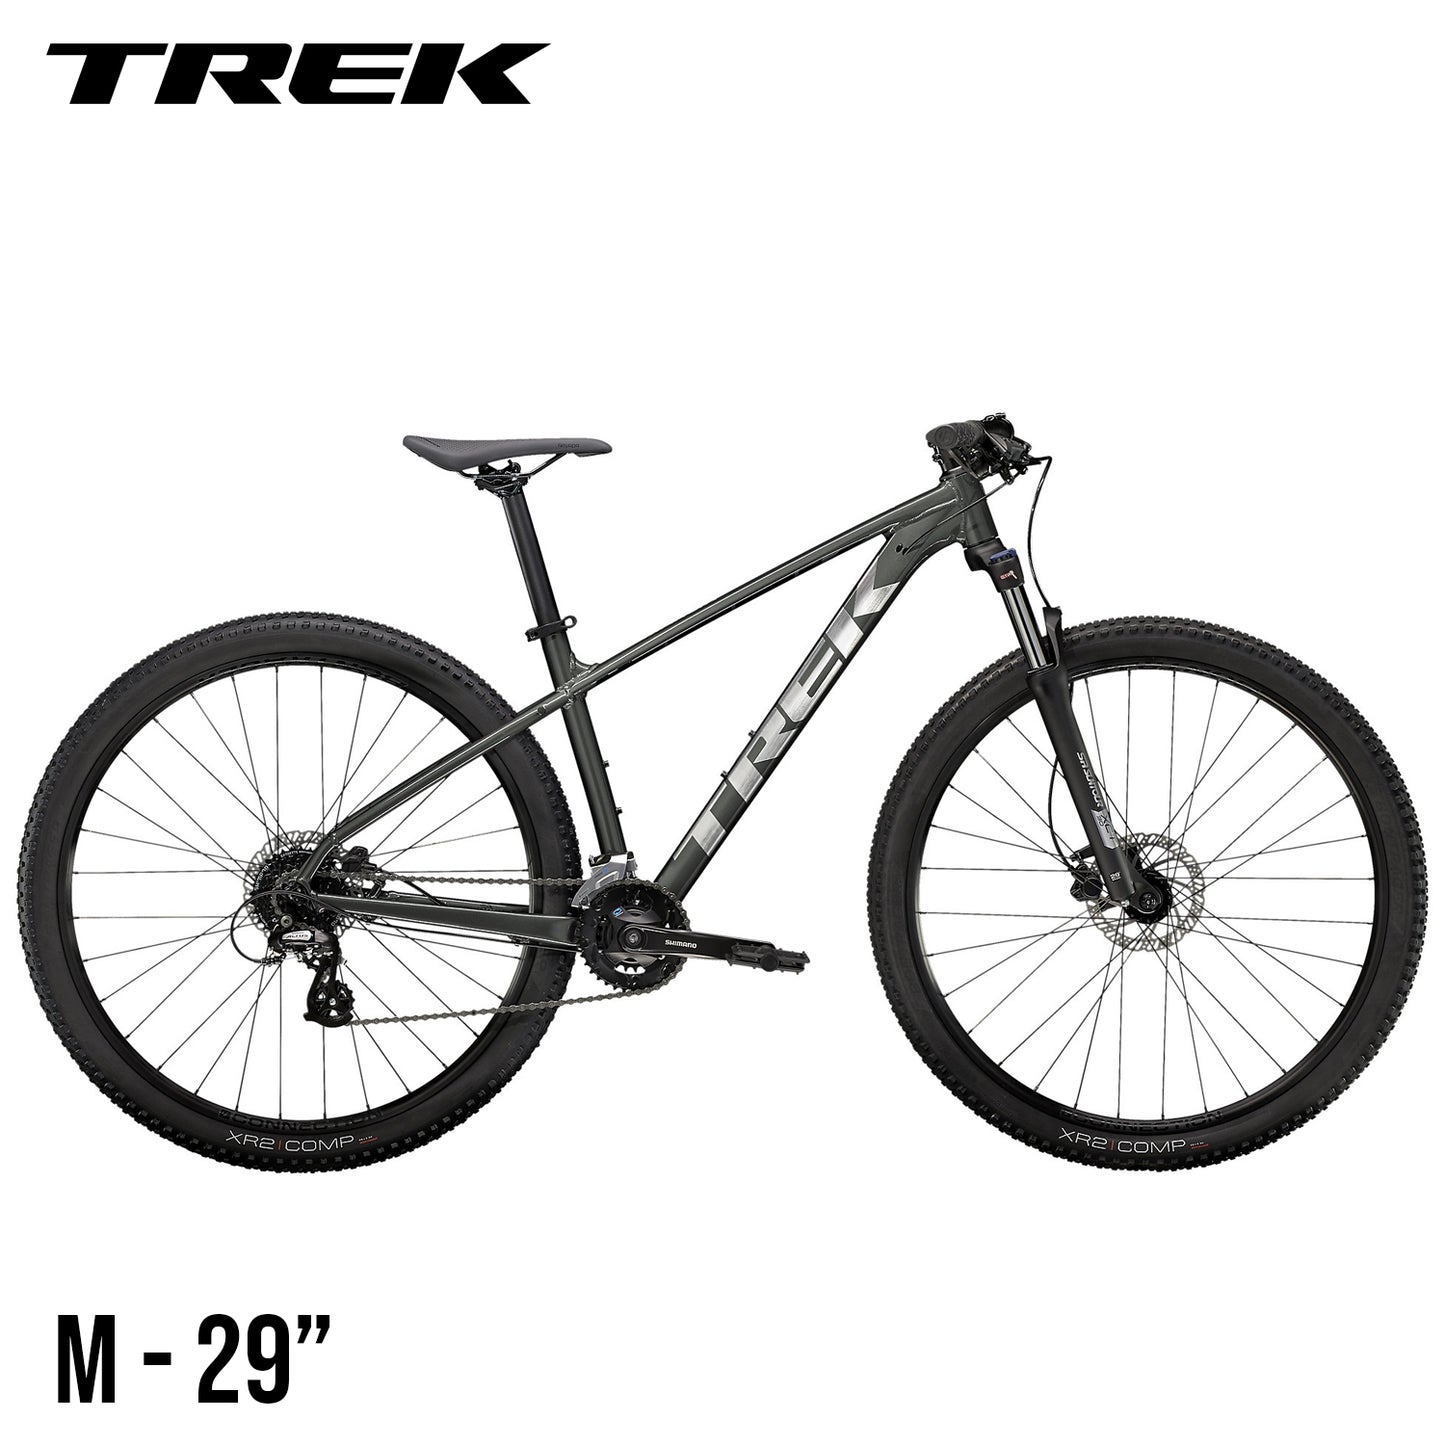 TREK Marlin 5 Gen 2 Cross Country Mountain Bike 29er - Lithium Grey